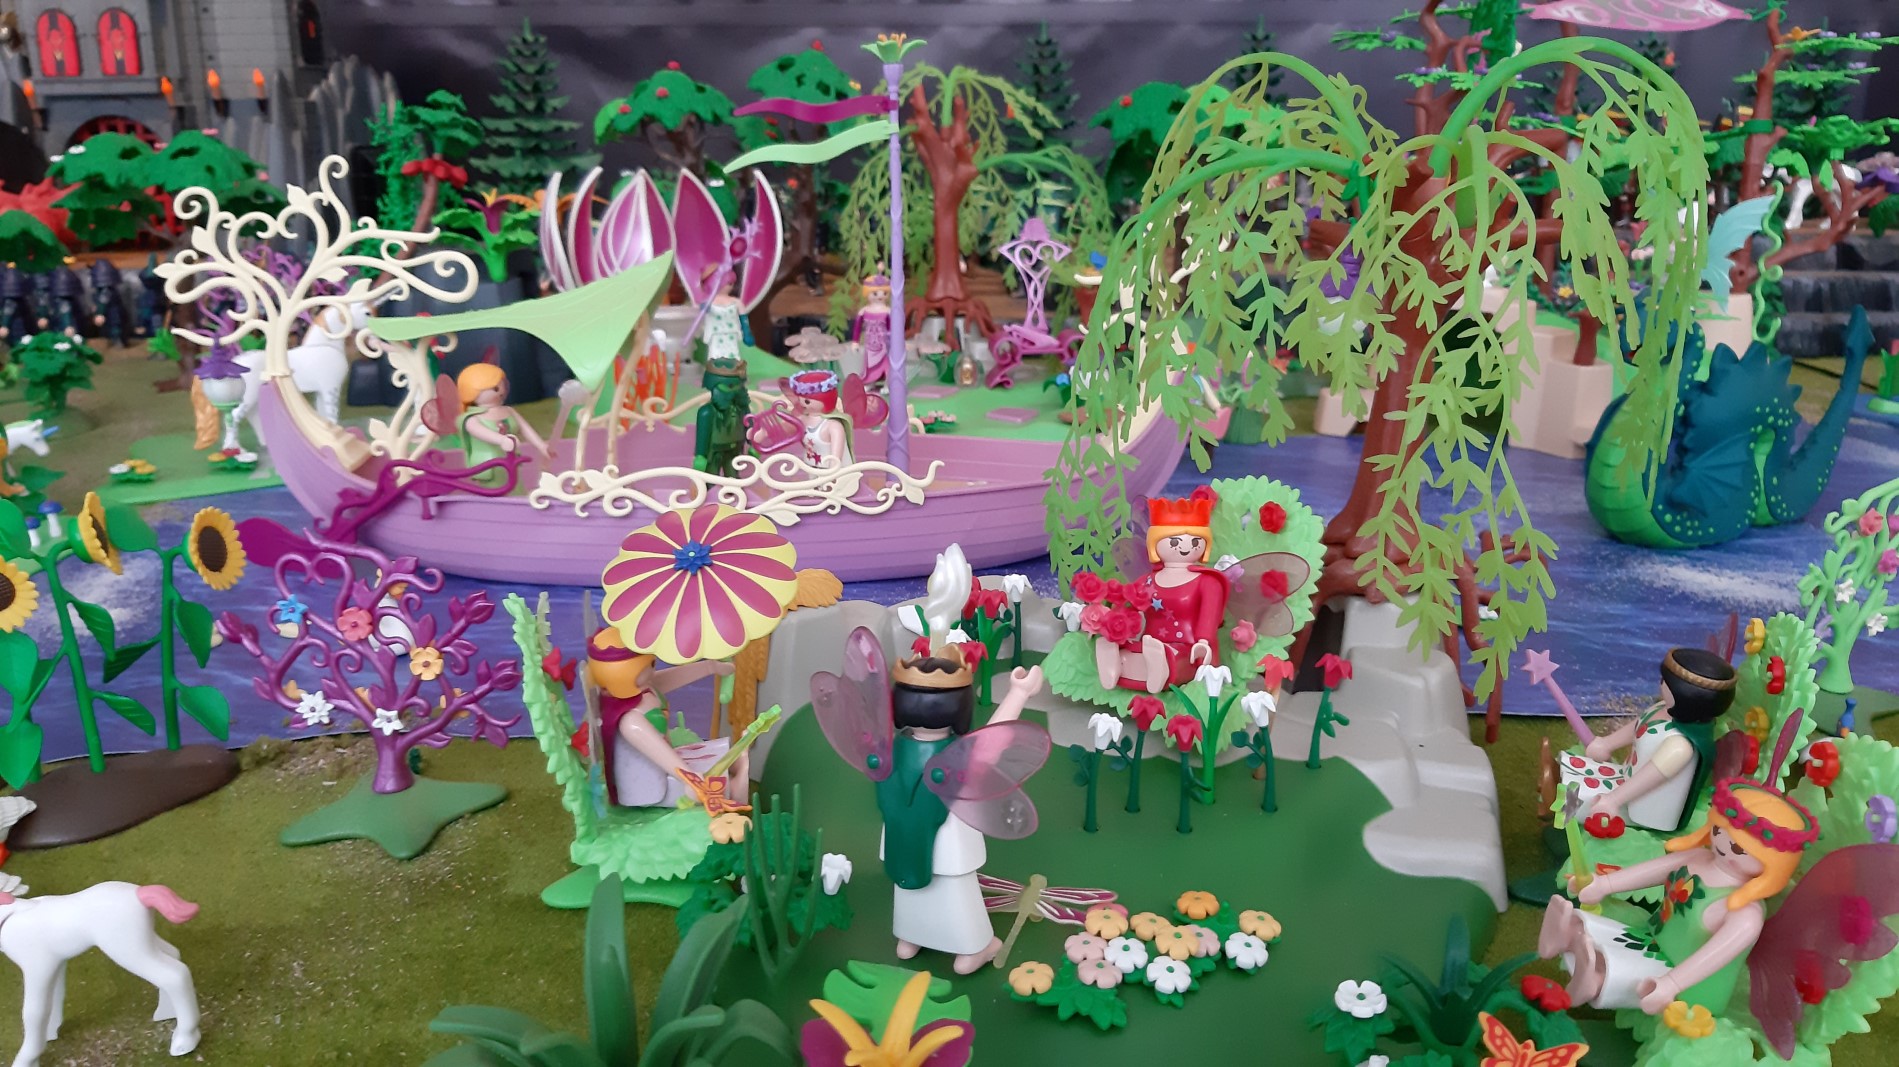 Diorama Playmobil Mundo magico